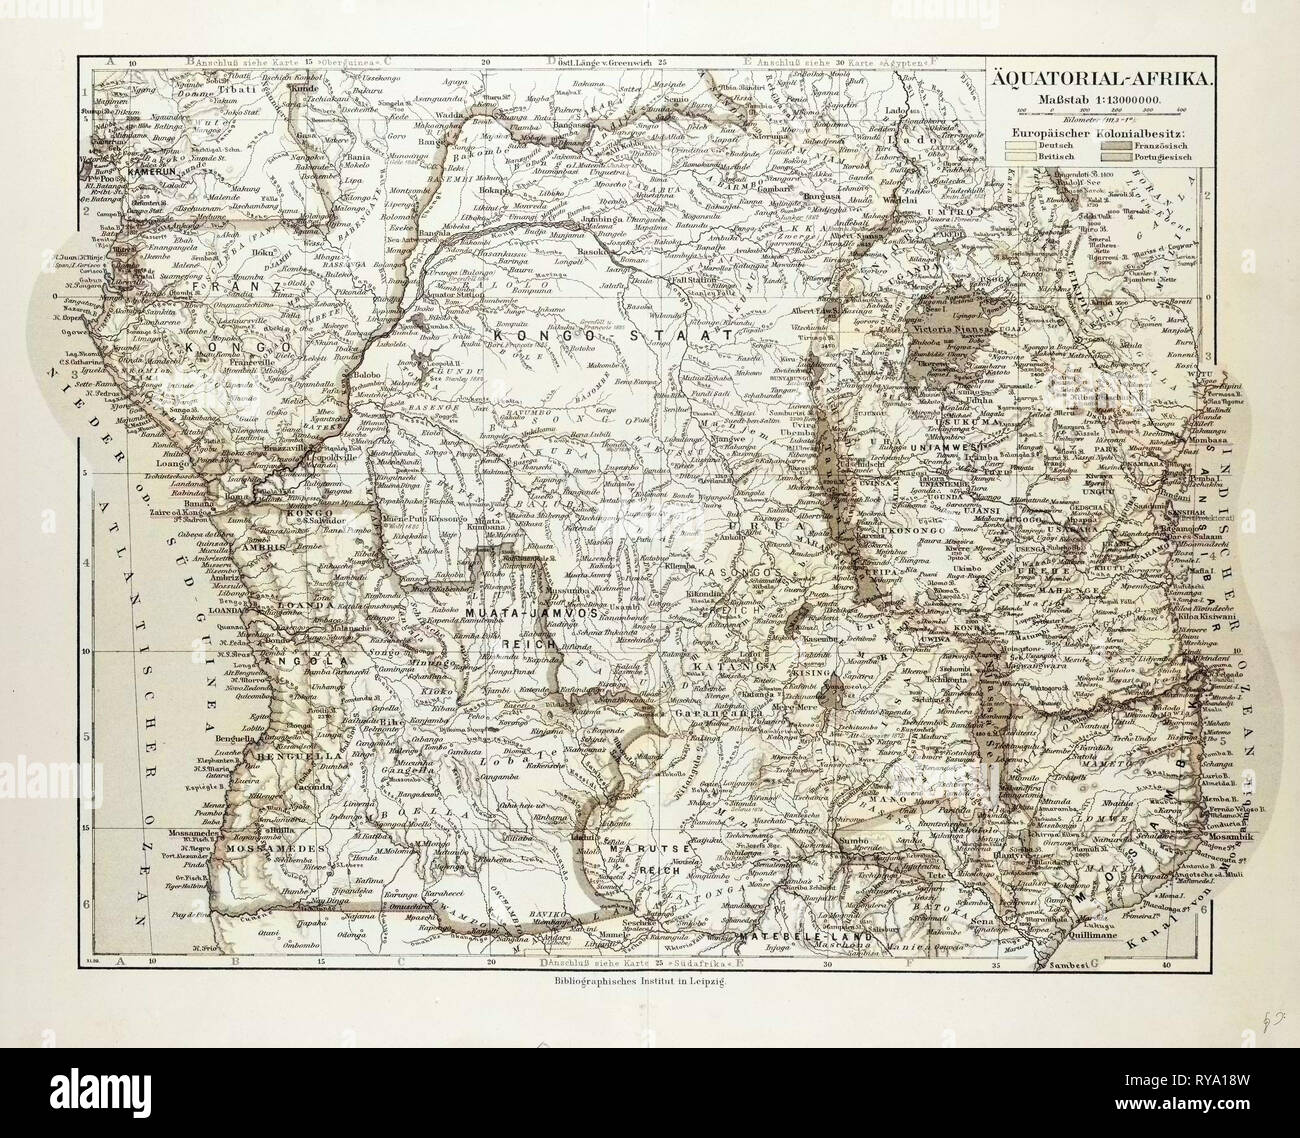 Map of Equatorial Africa the Republic of Mozambique the Republic of Angola Uganda Kenya 1899 Stock Photo